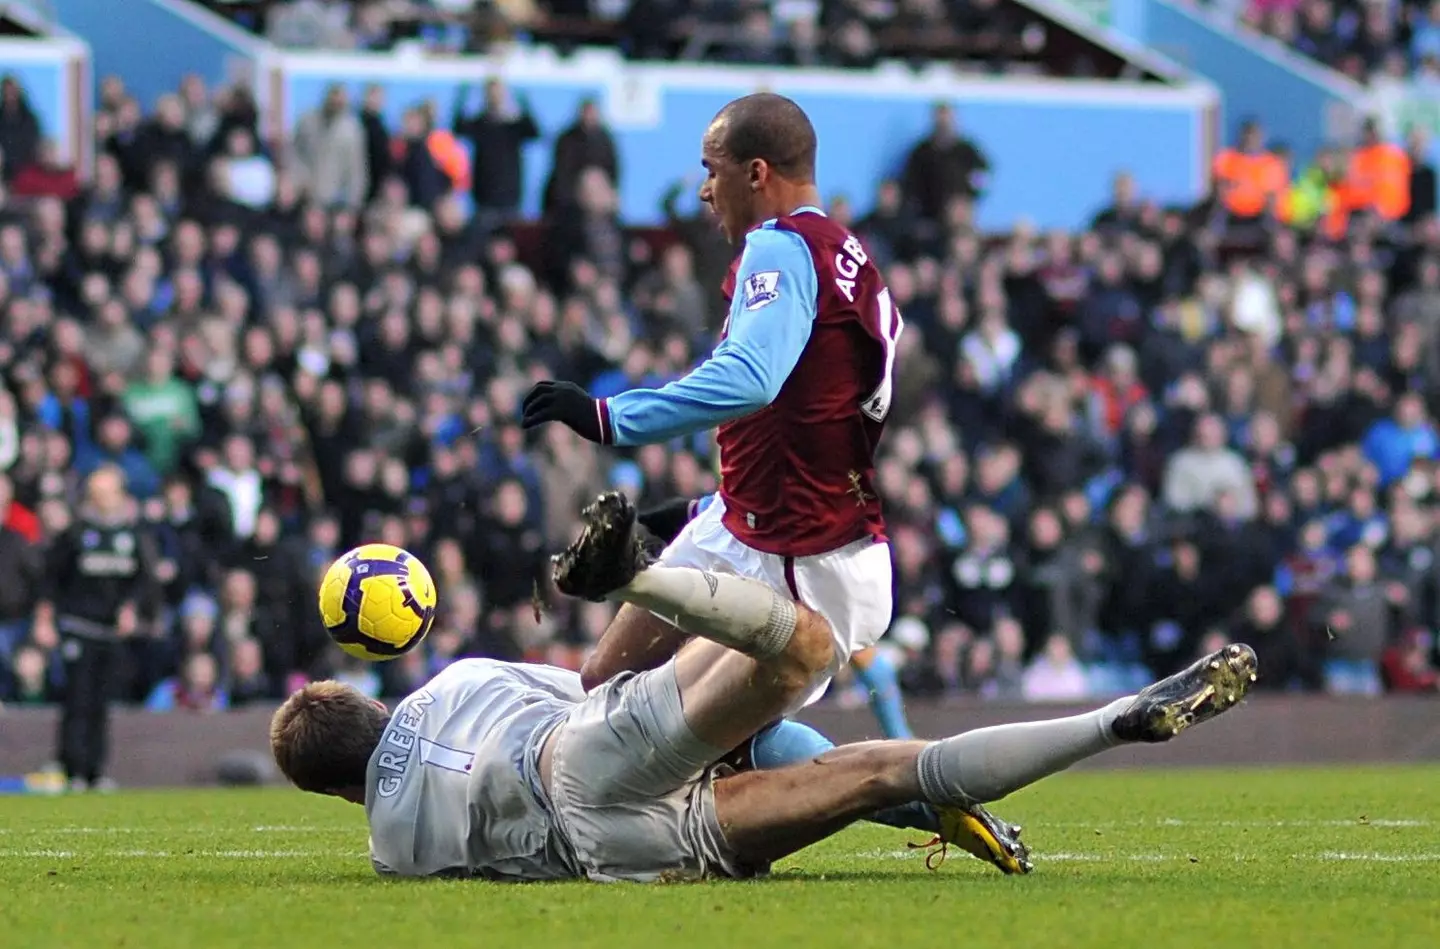 Former Aston Villa striker Gabriel Agbonlahor playing against ex-West Ham shot-stopper Robert Green.